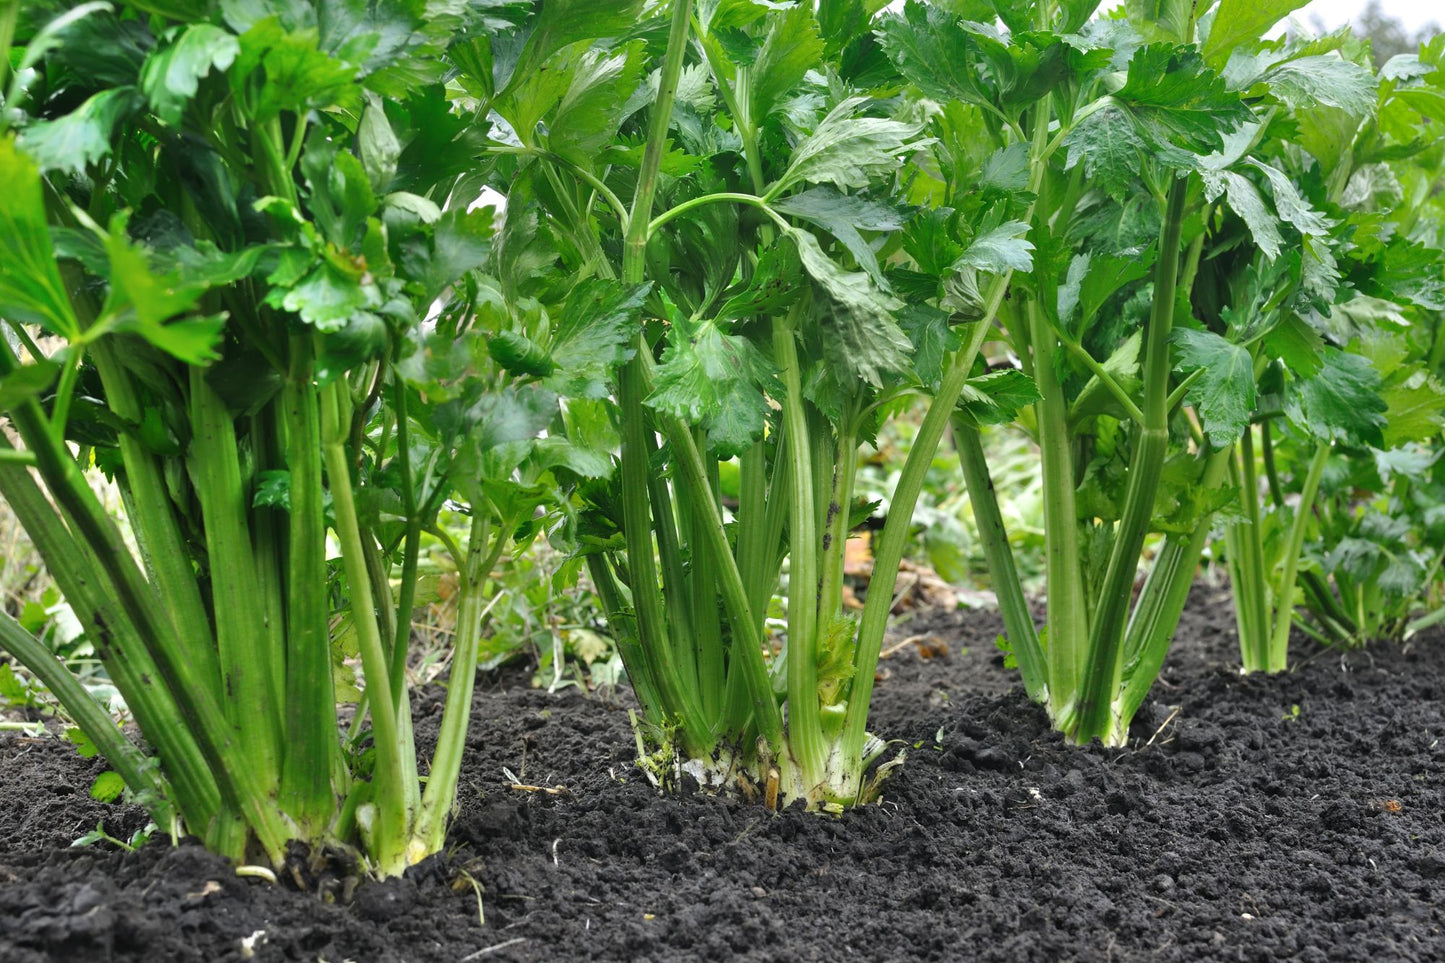 How to Grow Celery